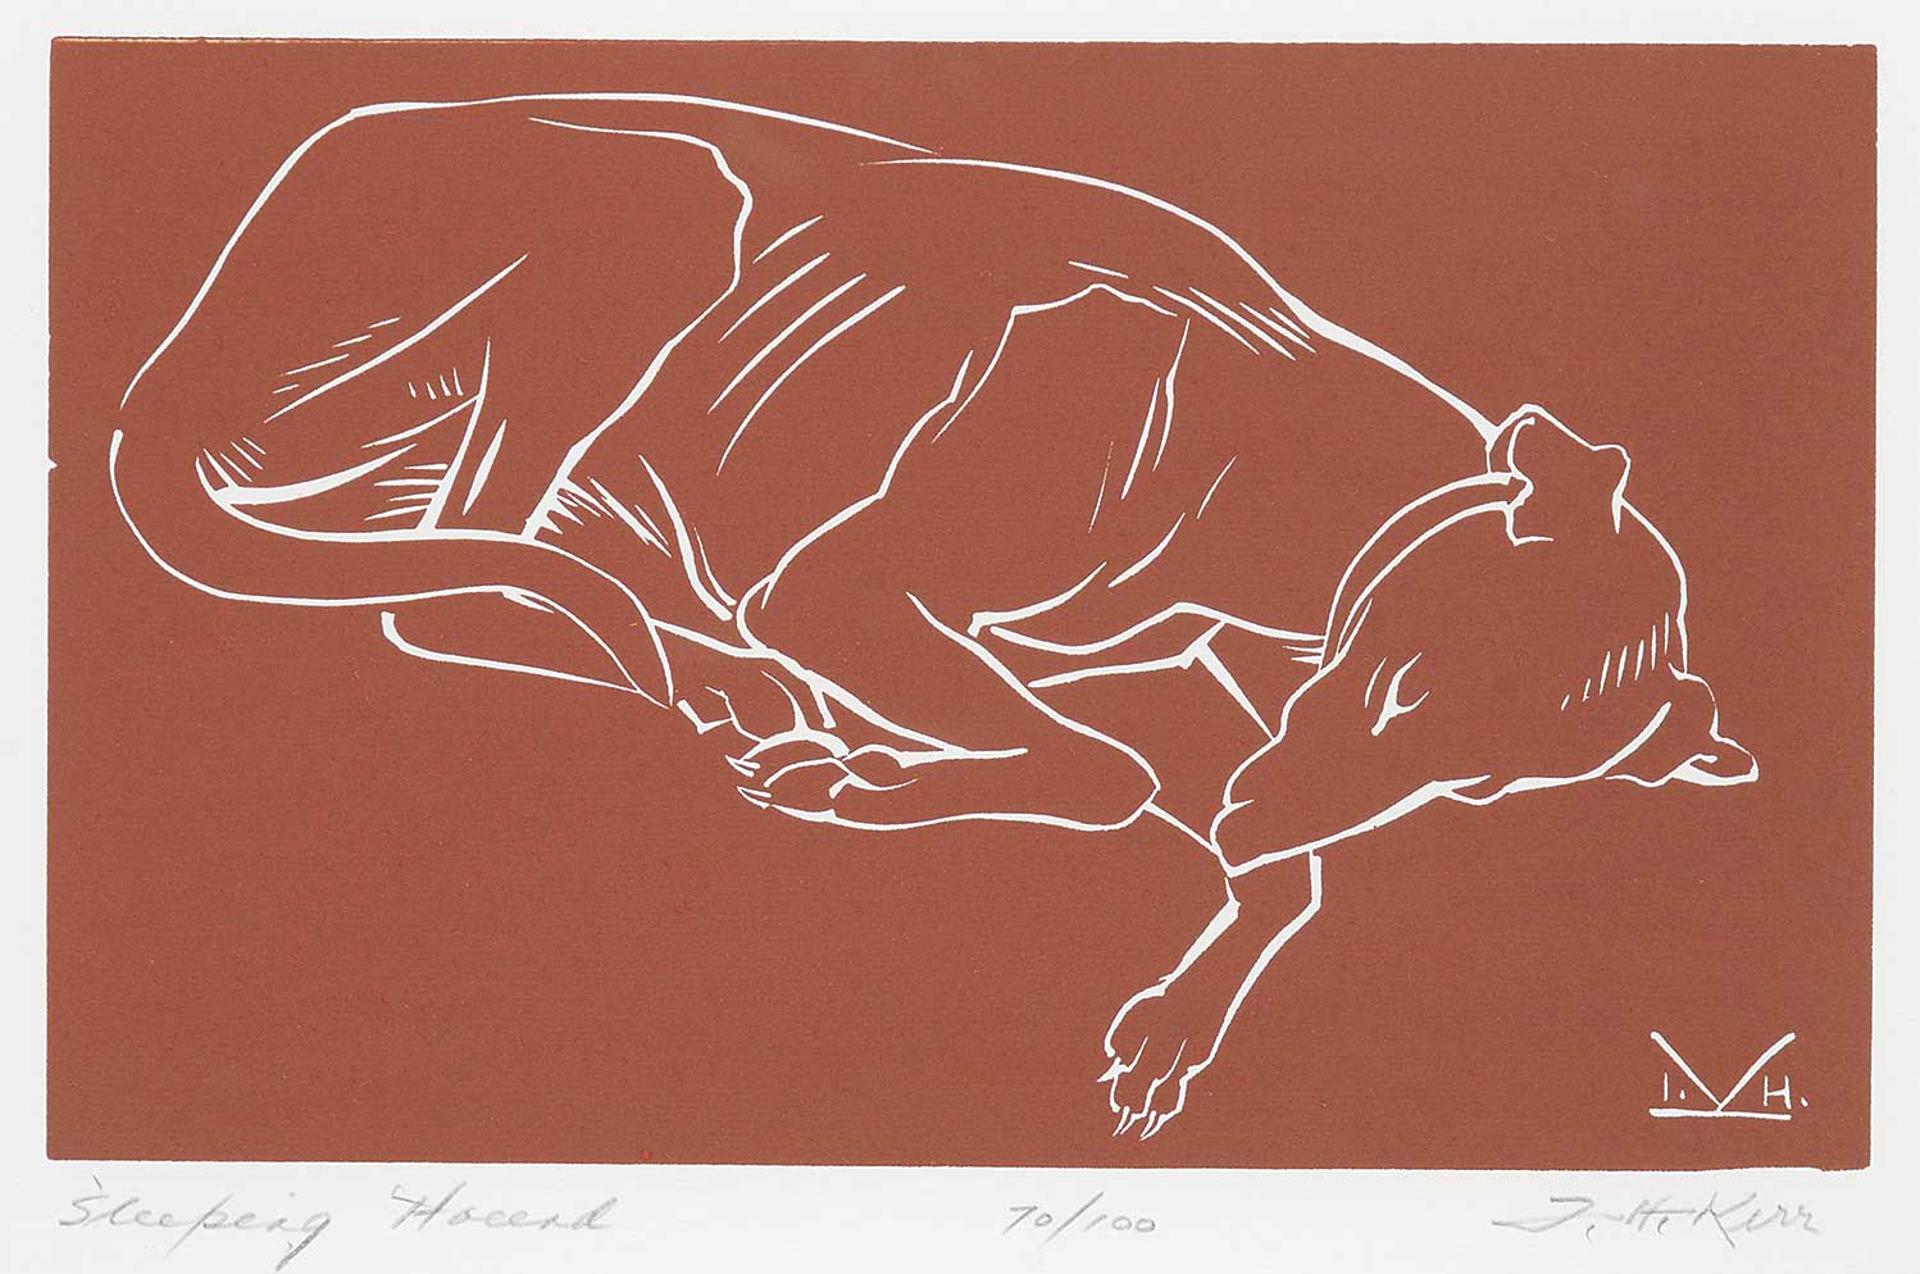 Illingworth Holey (Buck) Kerr (1905-1989) - Sleeping Hound  #70/100